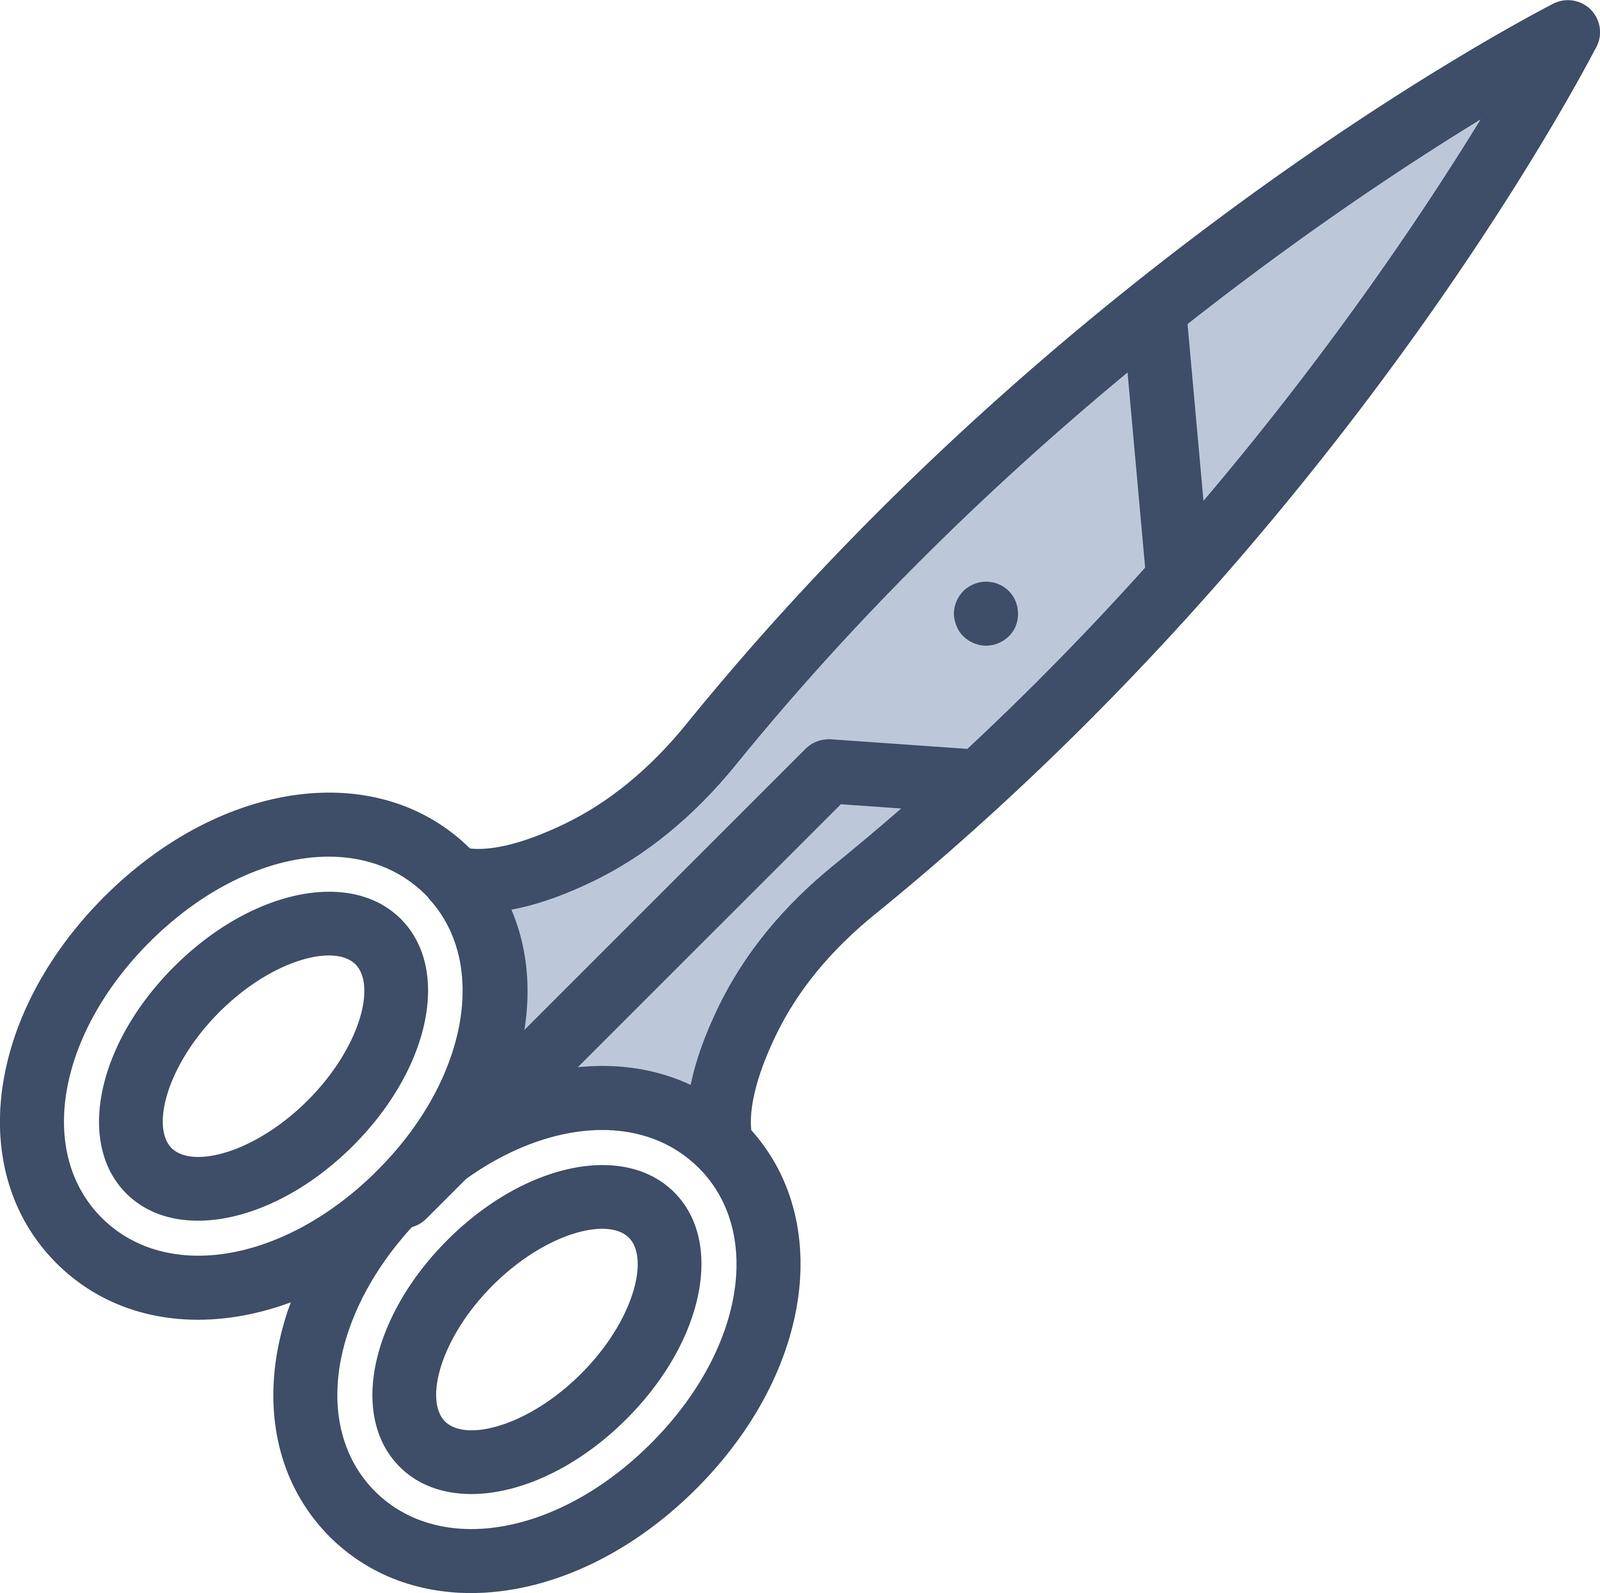 scissor Vector illustration on a transparent background. Premium quality symbols. Stroke vector icon for concept and graphic design.